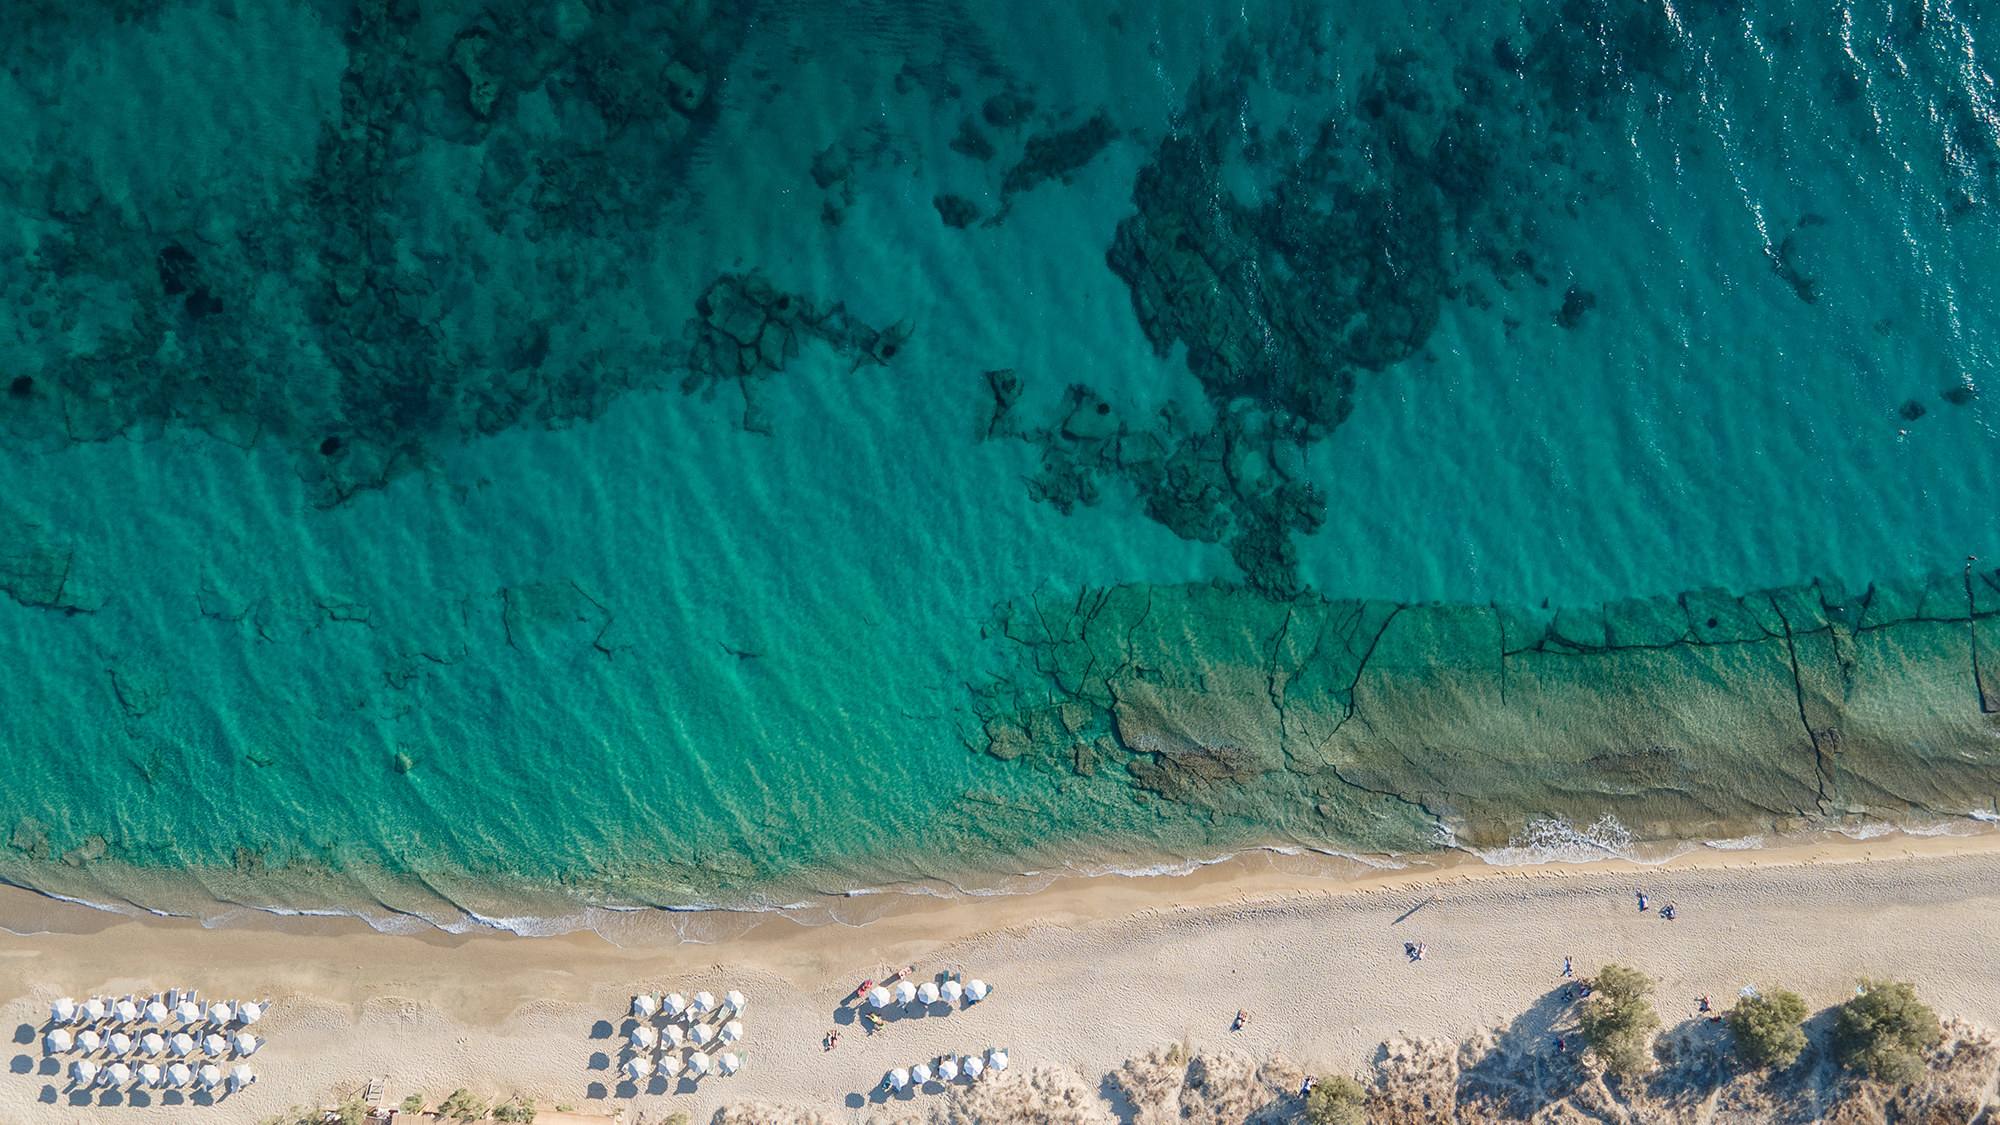 Plaka Beach Naxos Greece